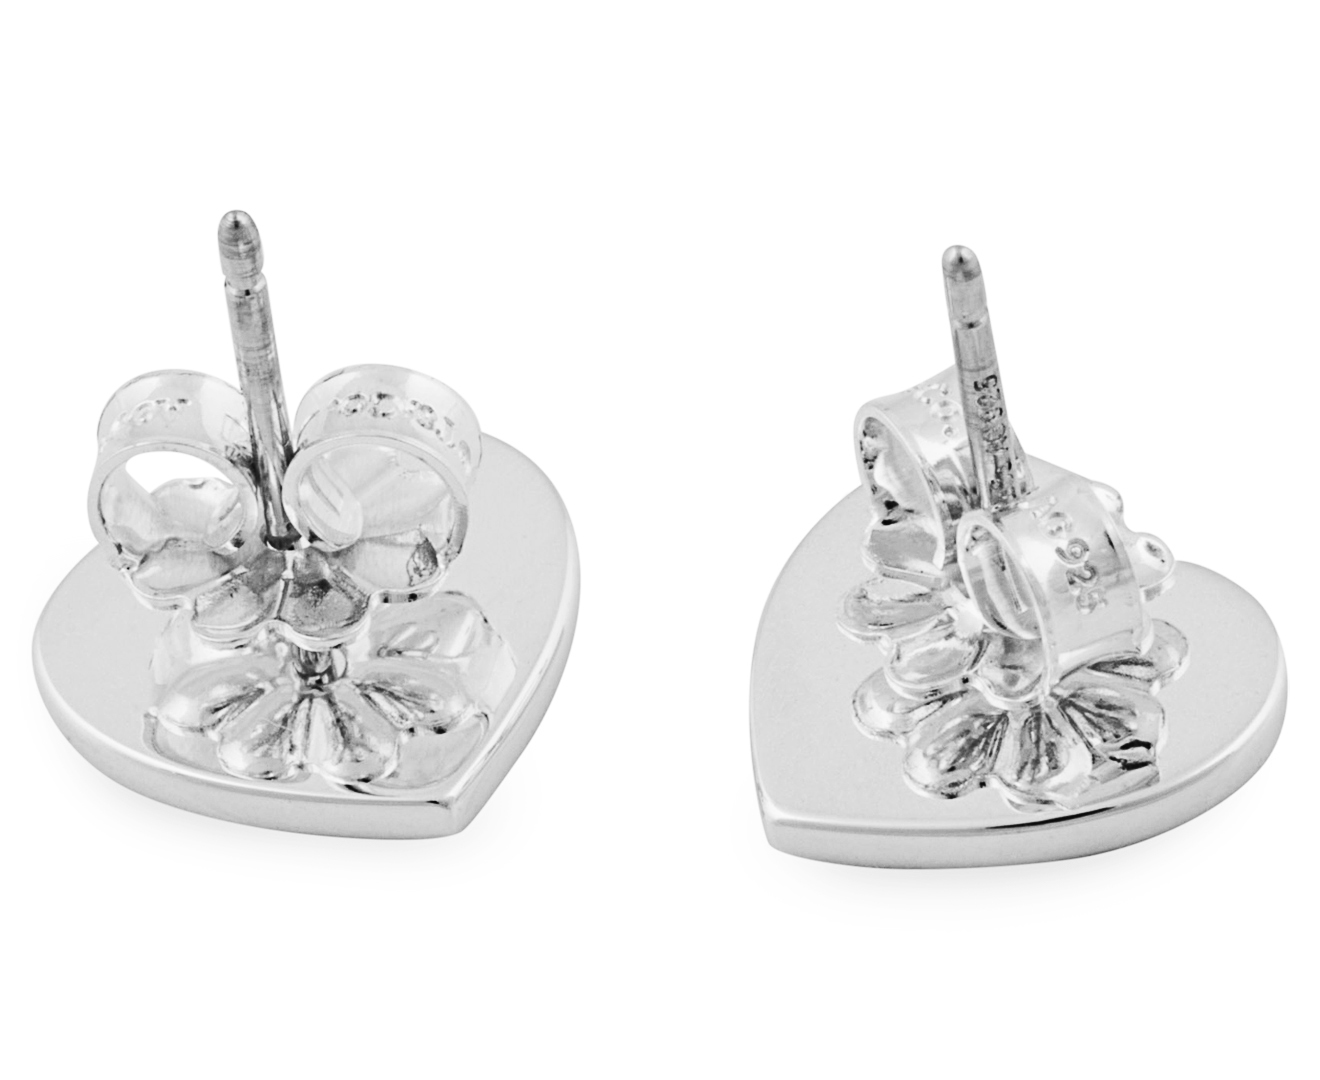 Tiffany & Co. "Return to Tiffany" Mini Heart Tag Stud Earrings - Silver | Catch.com.au